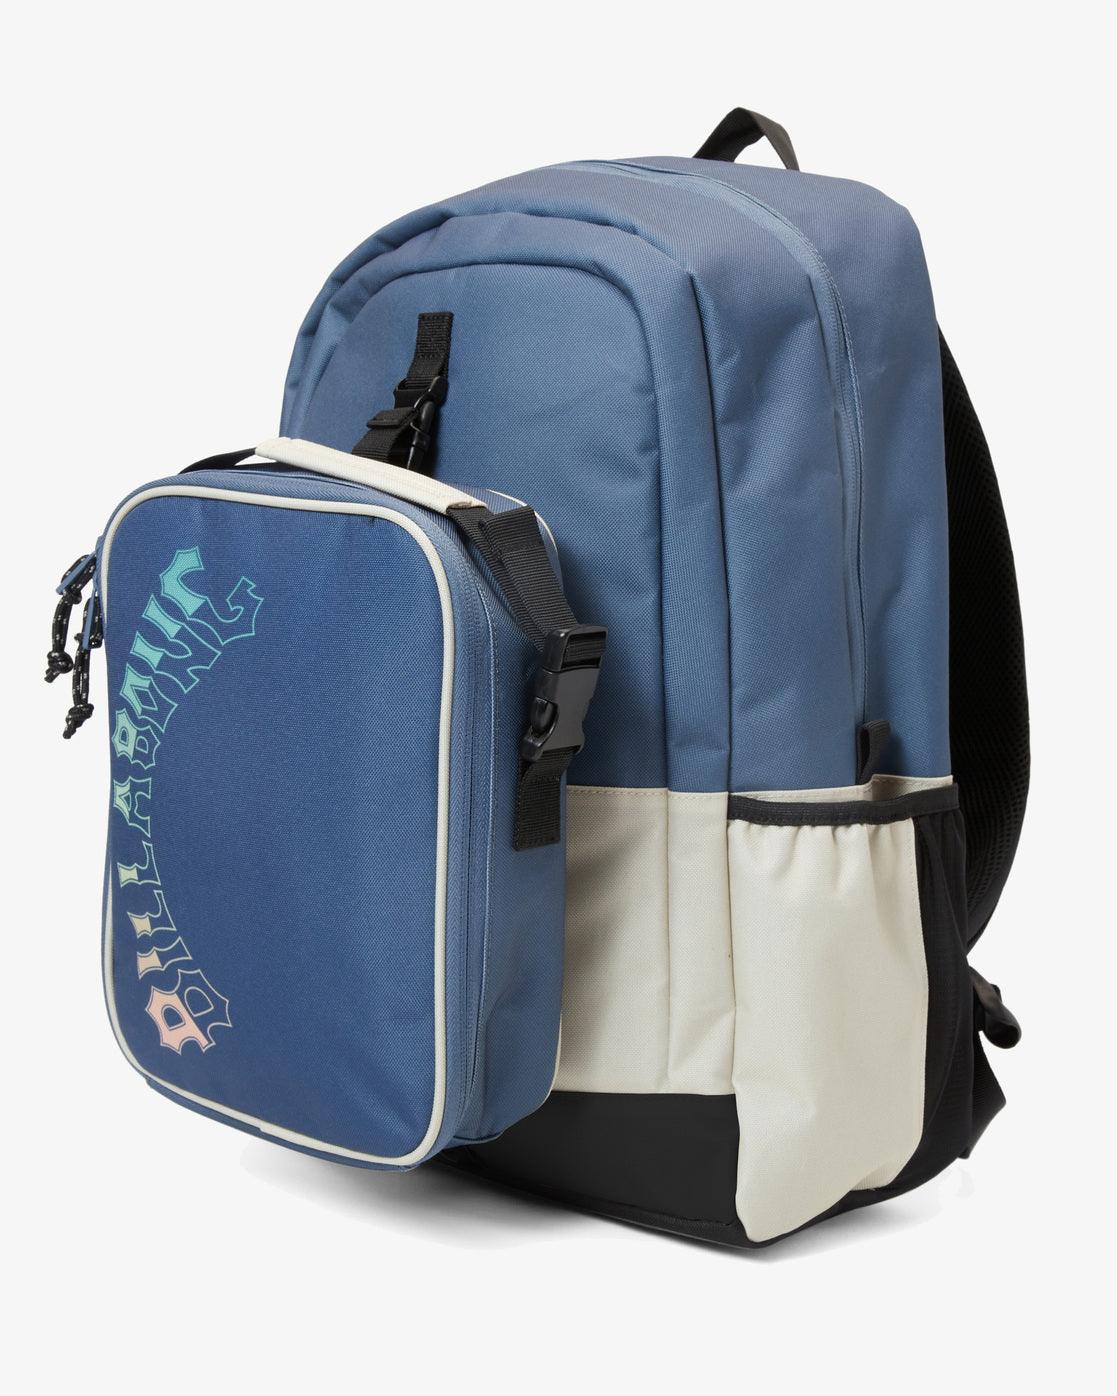 Command Duo 25L Backpack - SoHa Surf Shop